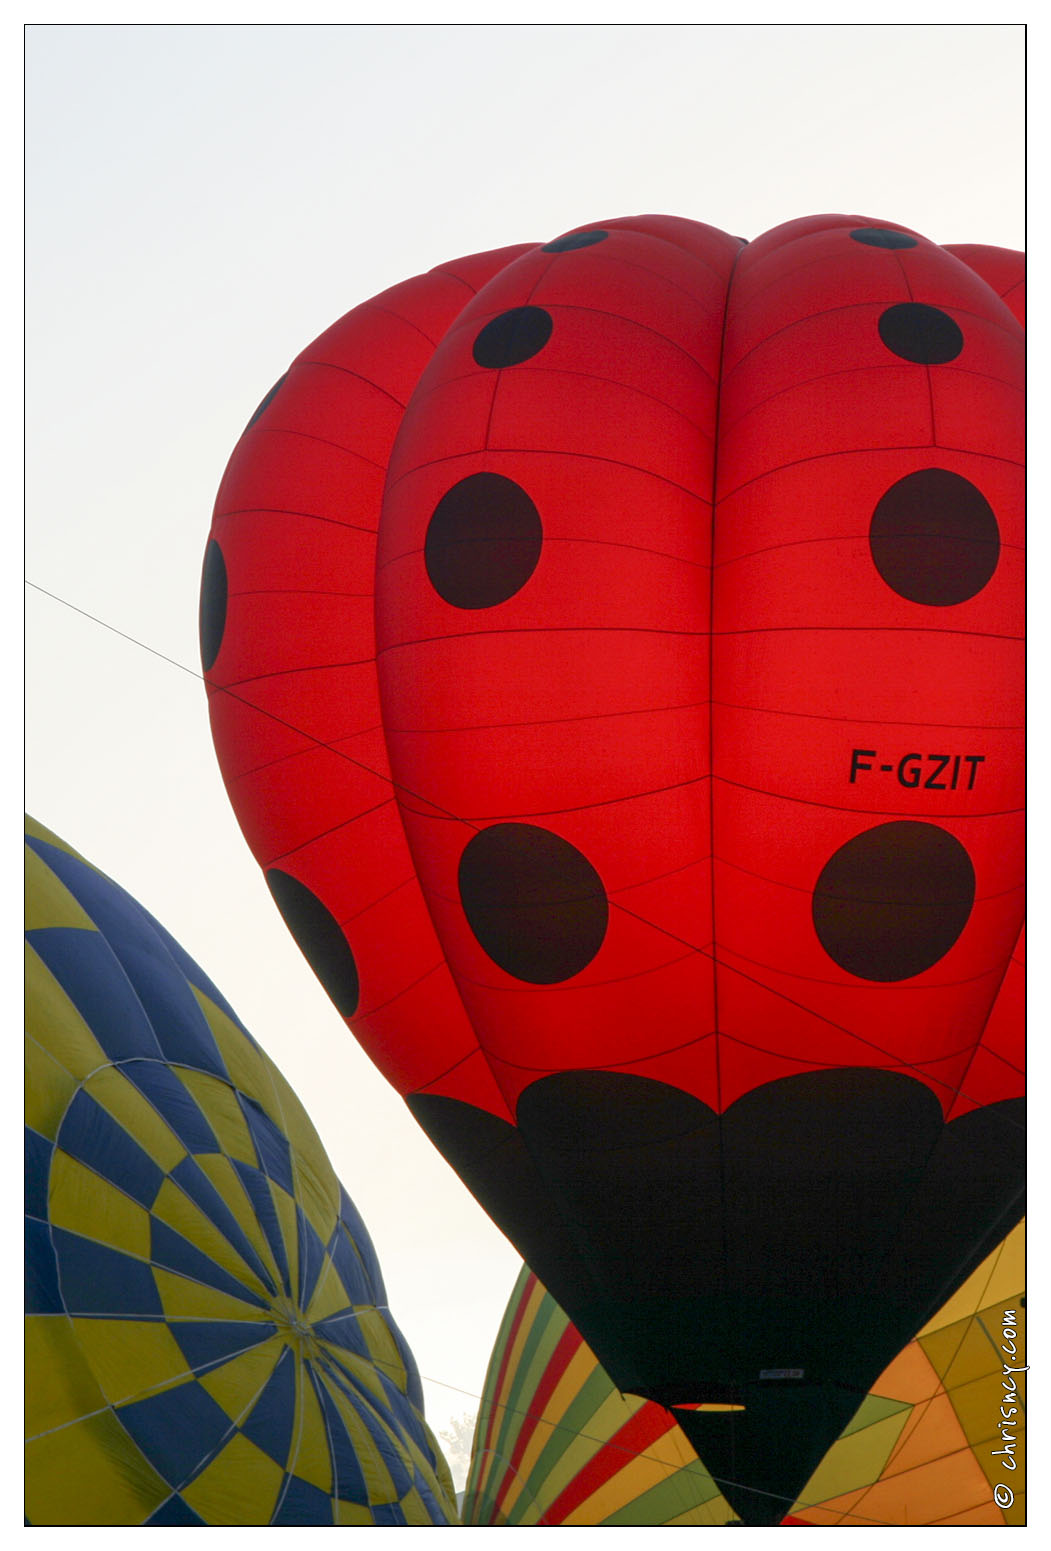 20070731-8283-Mondial_Air_Ballon.jpg